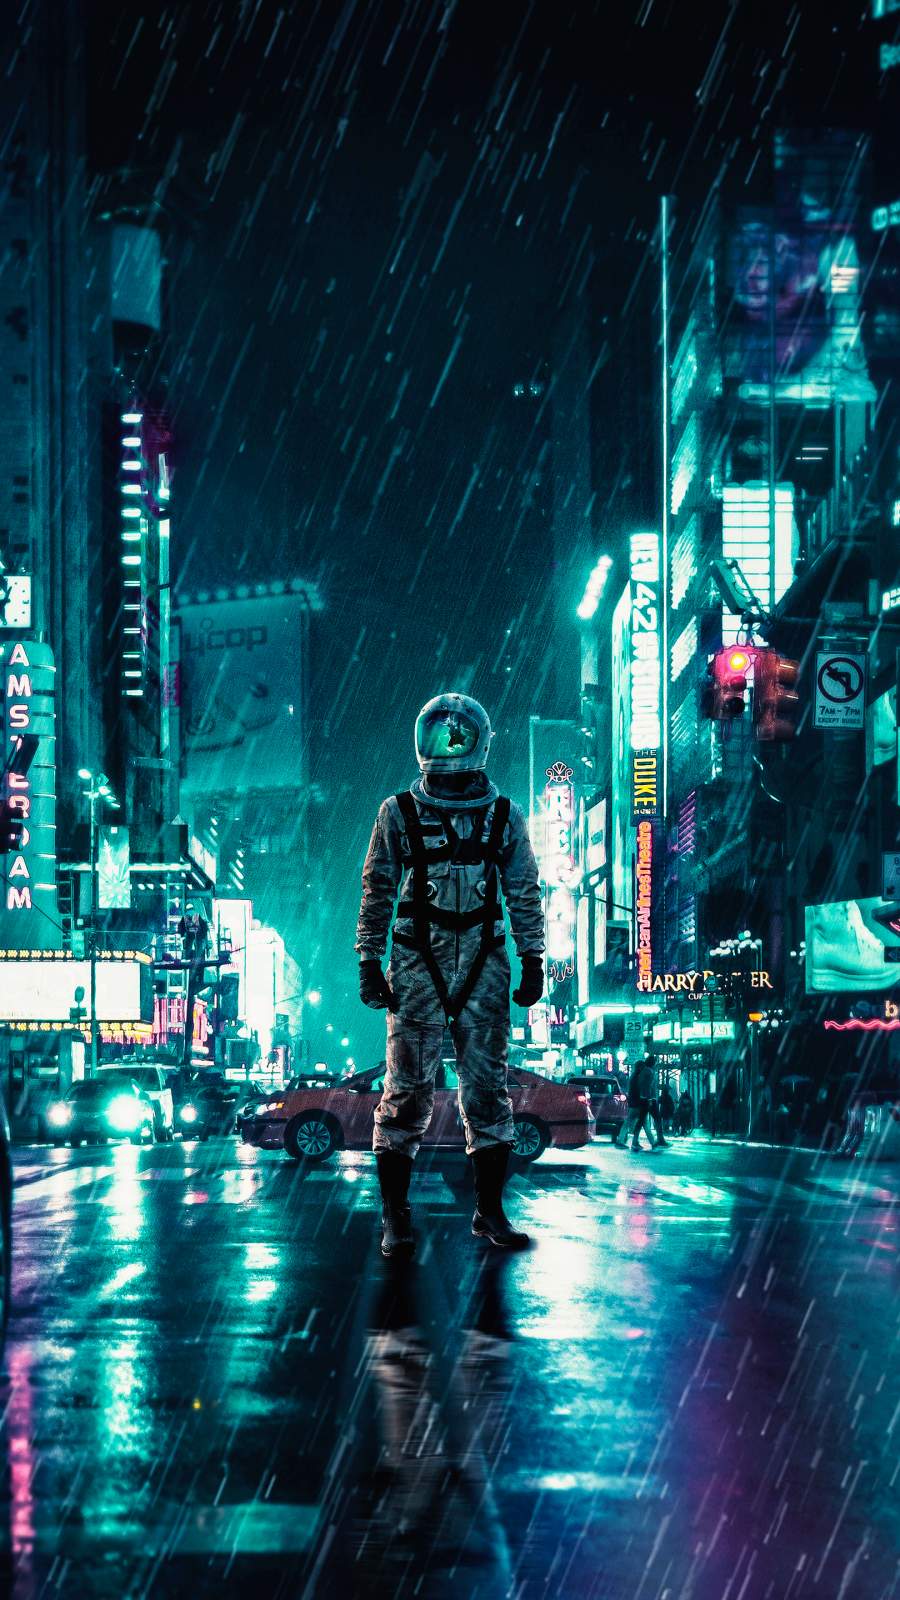 Another Rainy Night Astronaut iPhone Wallpaper Wallpaper, iPhone Wallpaper